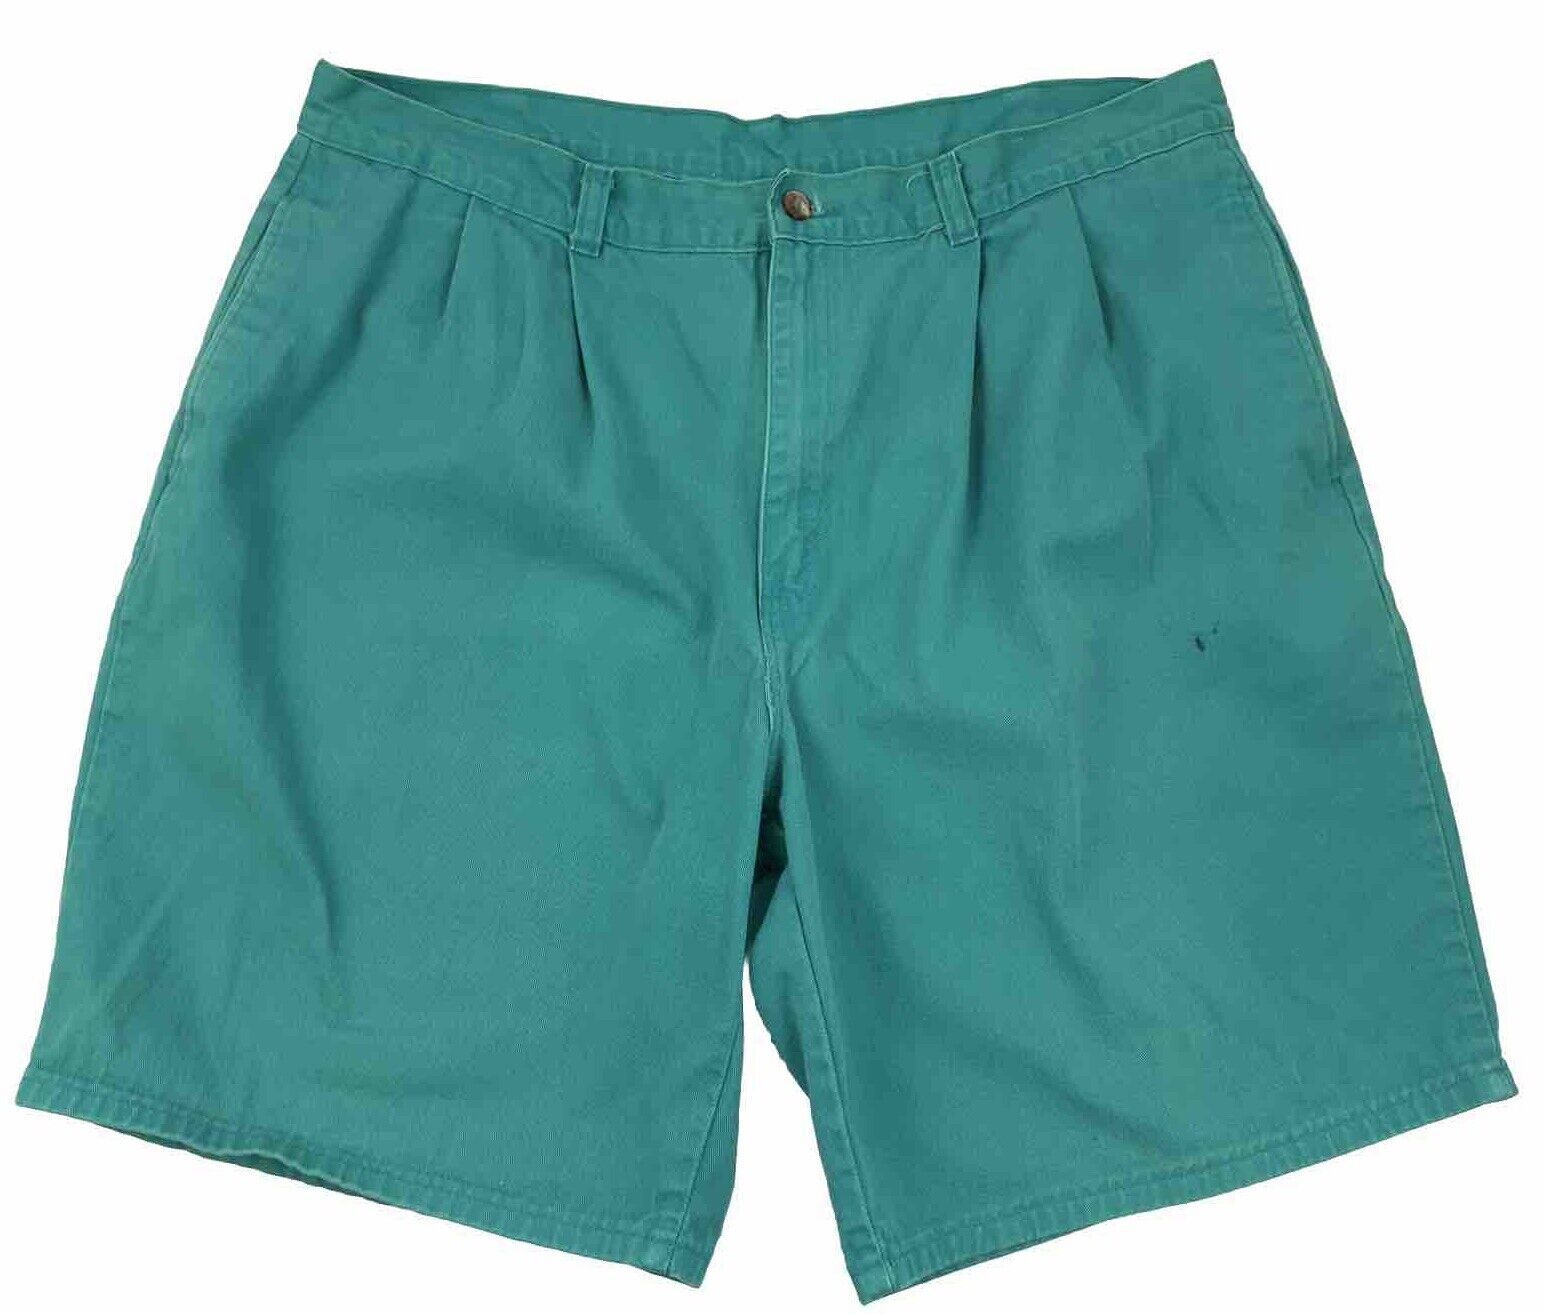 Vintage Duck Head Men’s Cotton Pleated Shorts Size 38 True Green